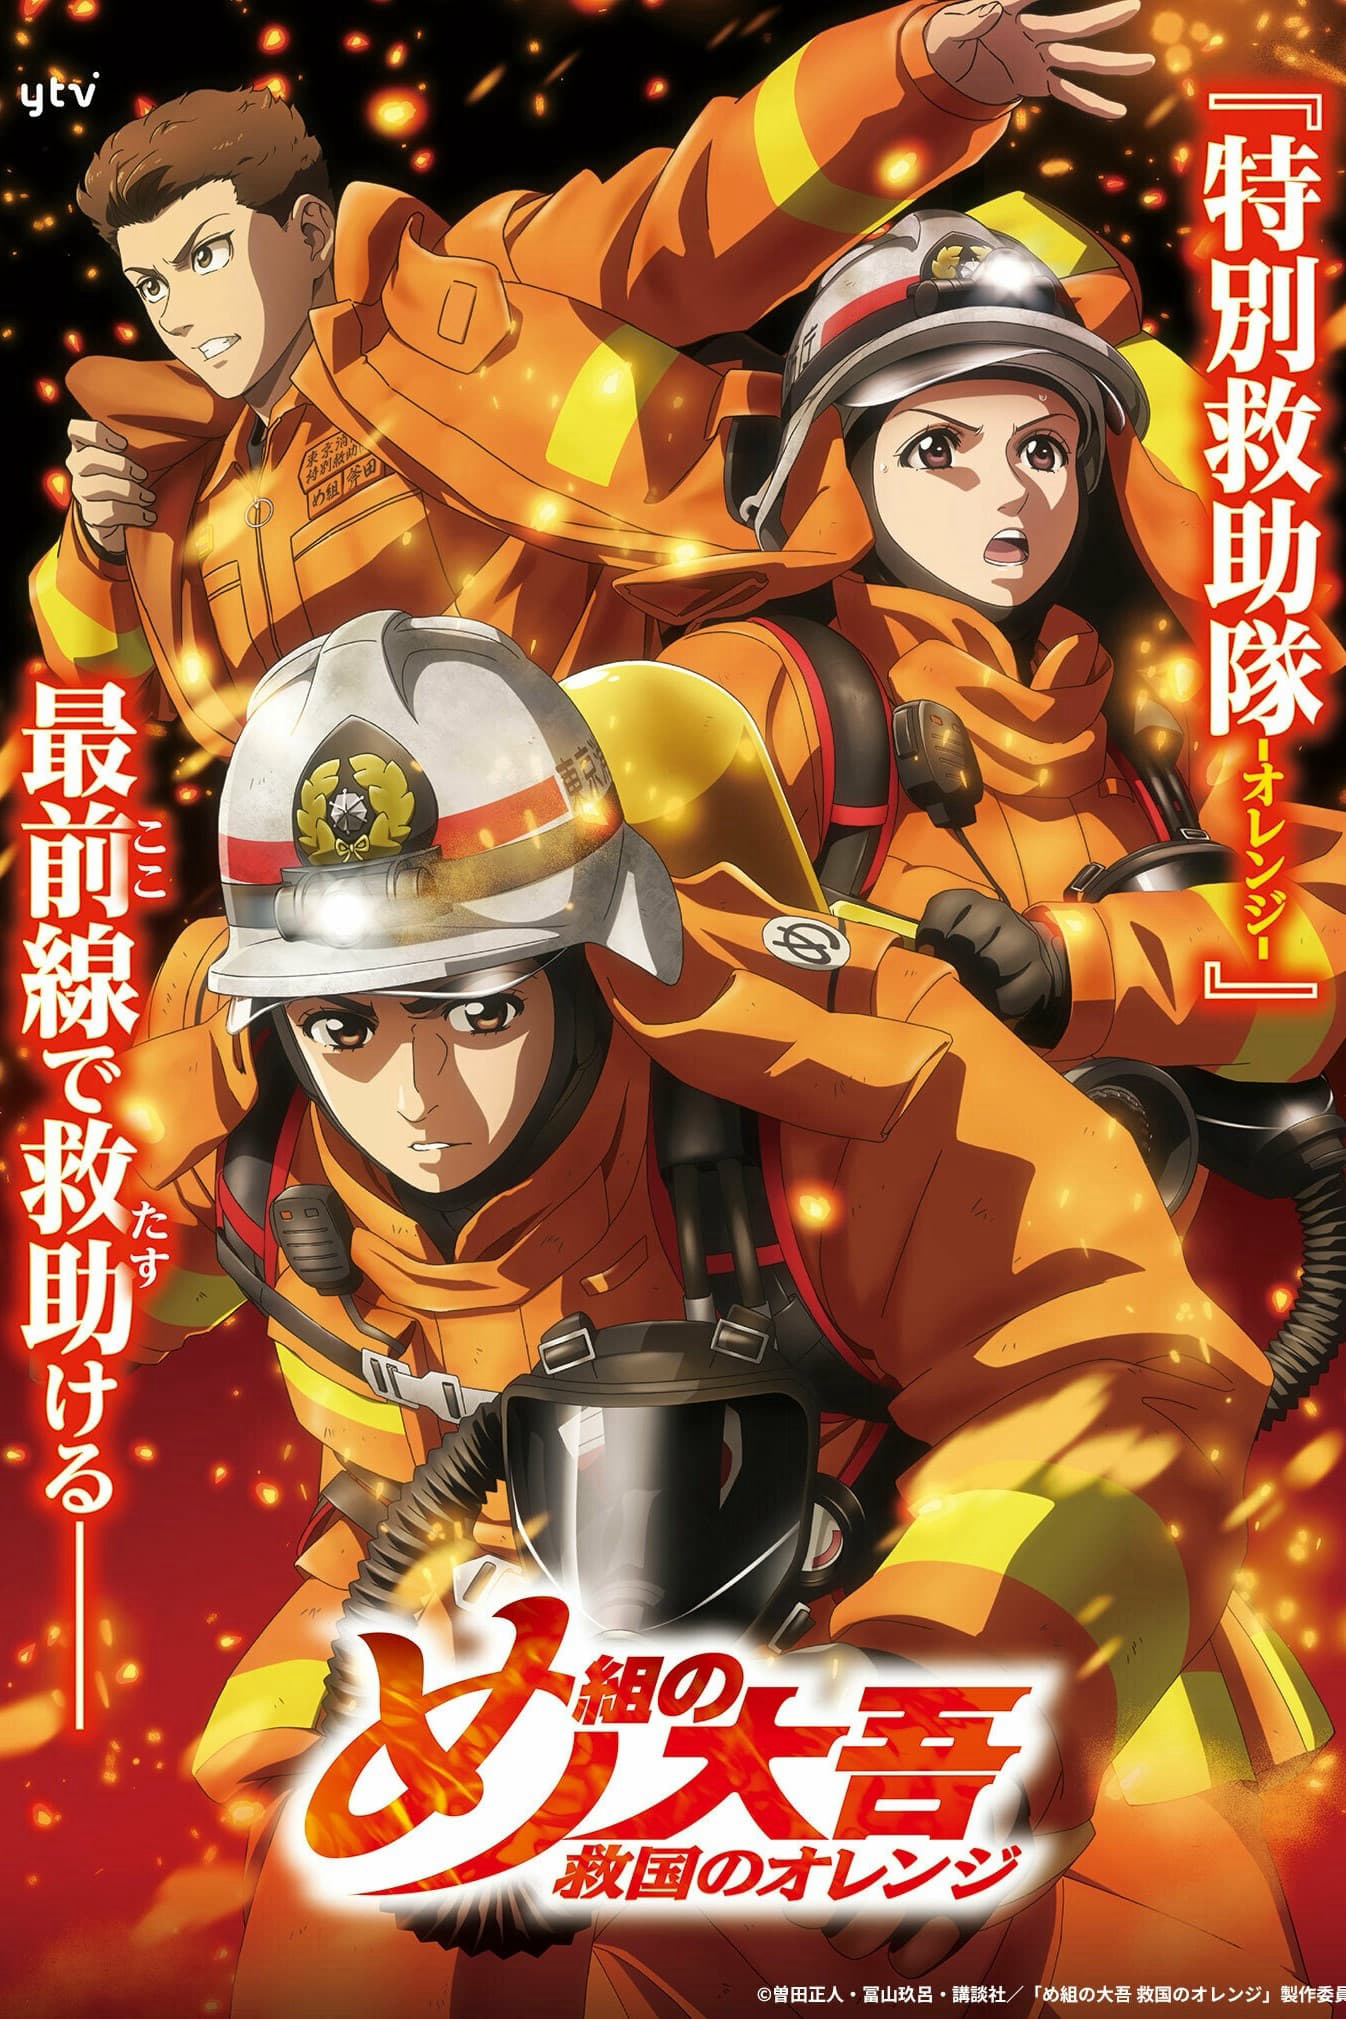 Poster Phim Lính Cứu Hỏa Daigo: Người Cứu Hộ Orange (Firefighter Daigo: Rescuer in Orange)